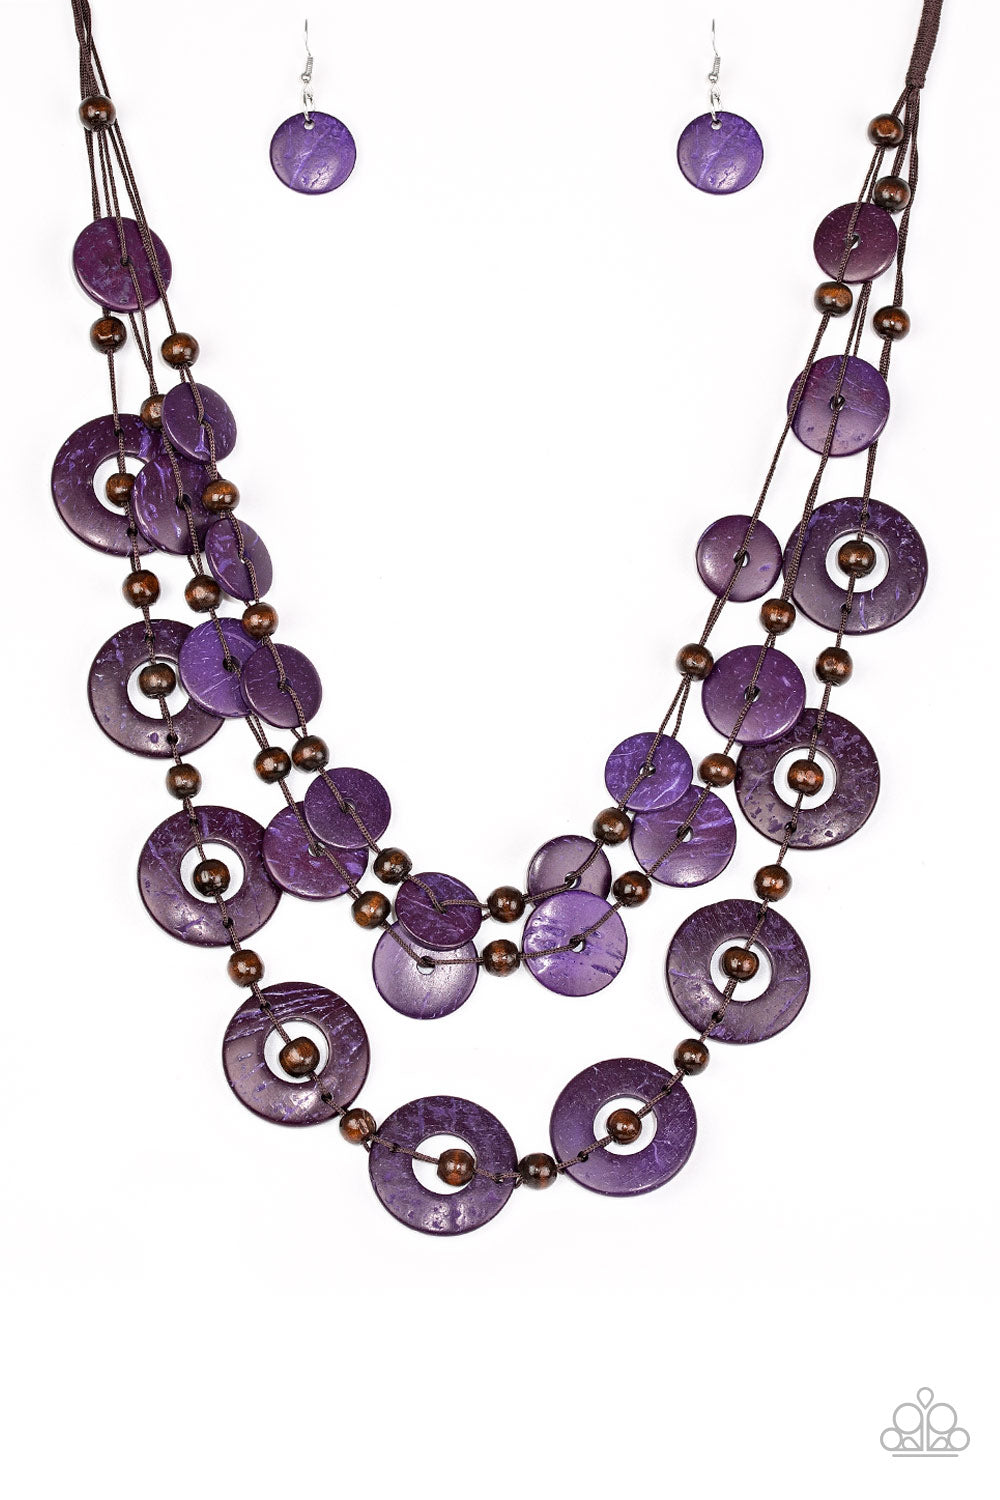 Catalina Coastin - Purple wood necklace